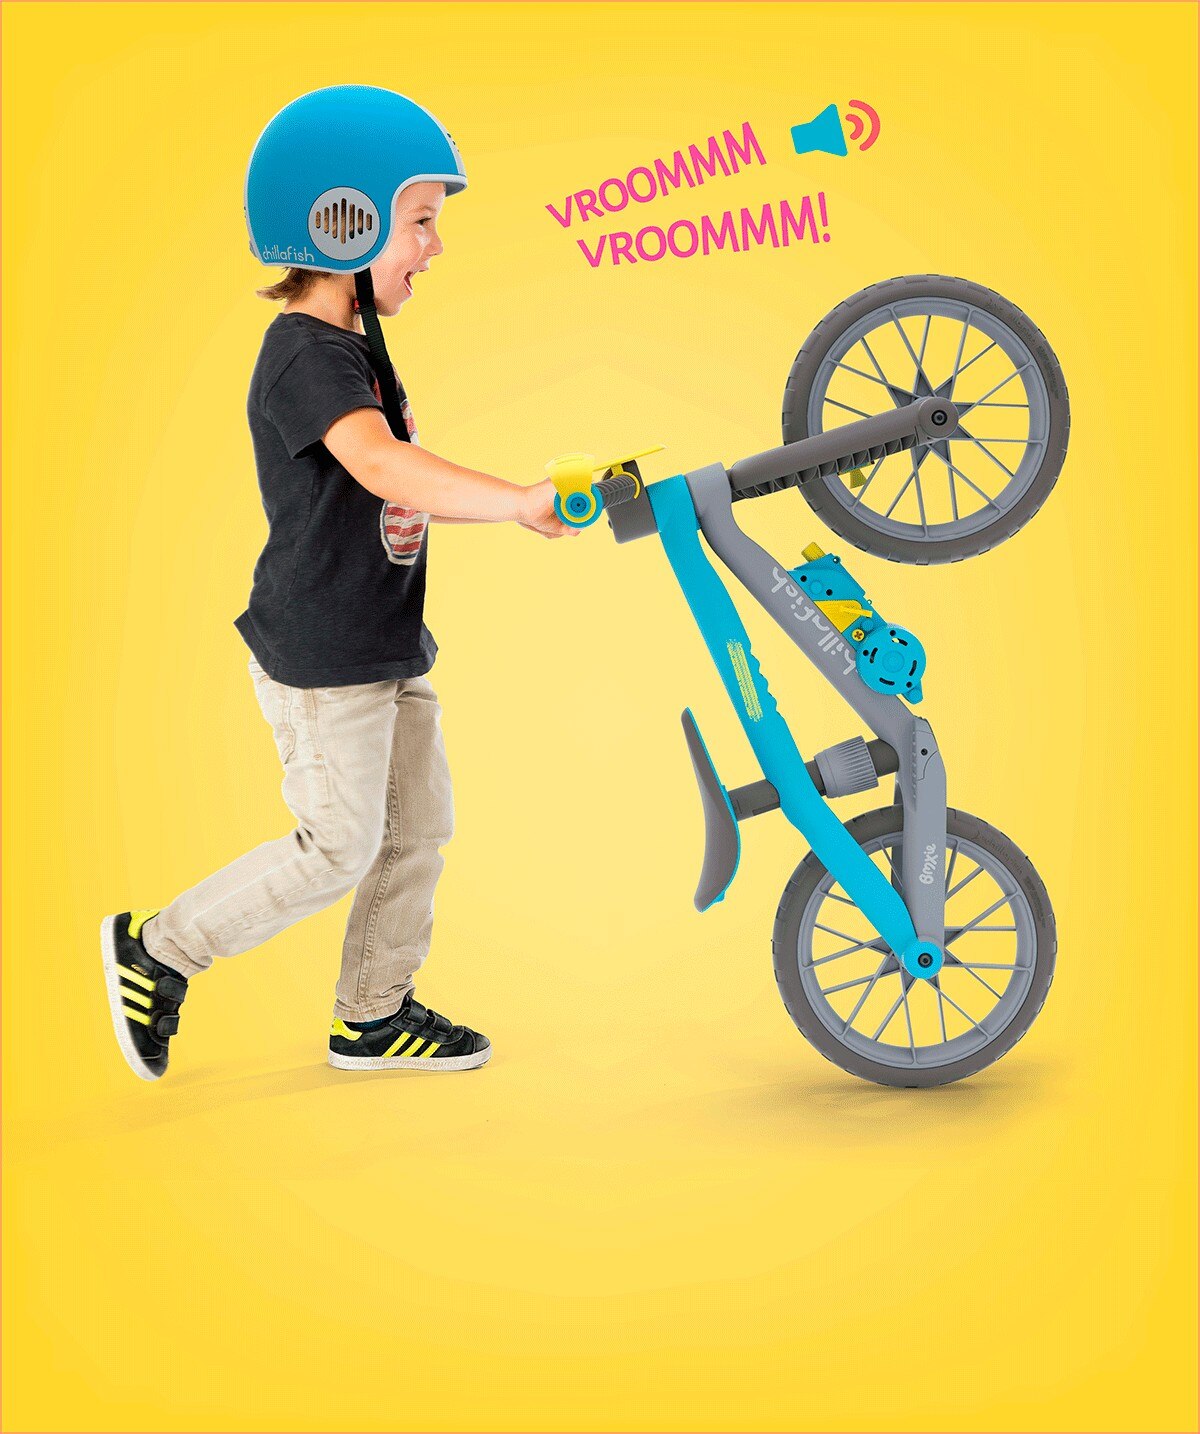 Chillafish 12吋兒童平衡訓練滑步車，適用年齡為2-5歲兒童，車體採高強化塑膠，無需充氣橡膠實心胎，旋轉式座椅調節無須工具。